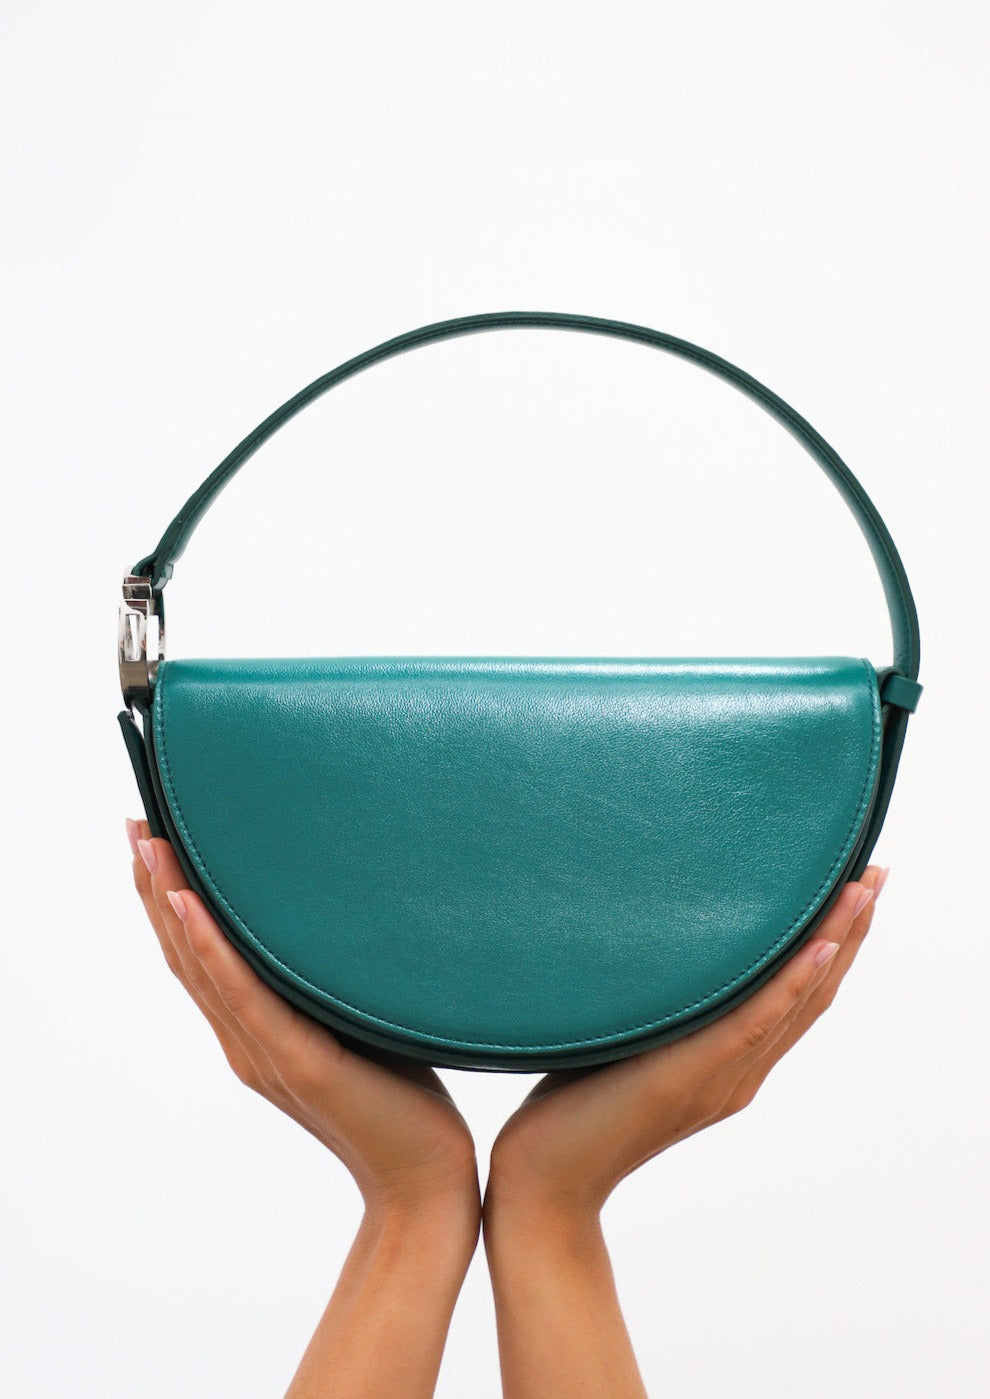 Dooz taurus celeste bag emerald green leather handbag half moon shape architectural design